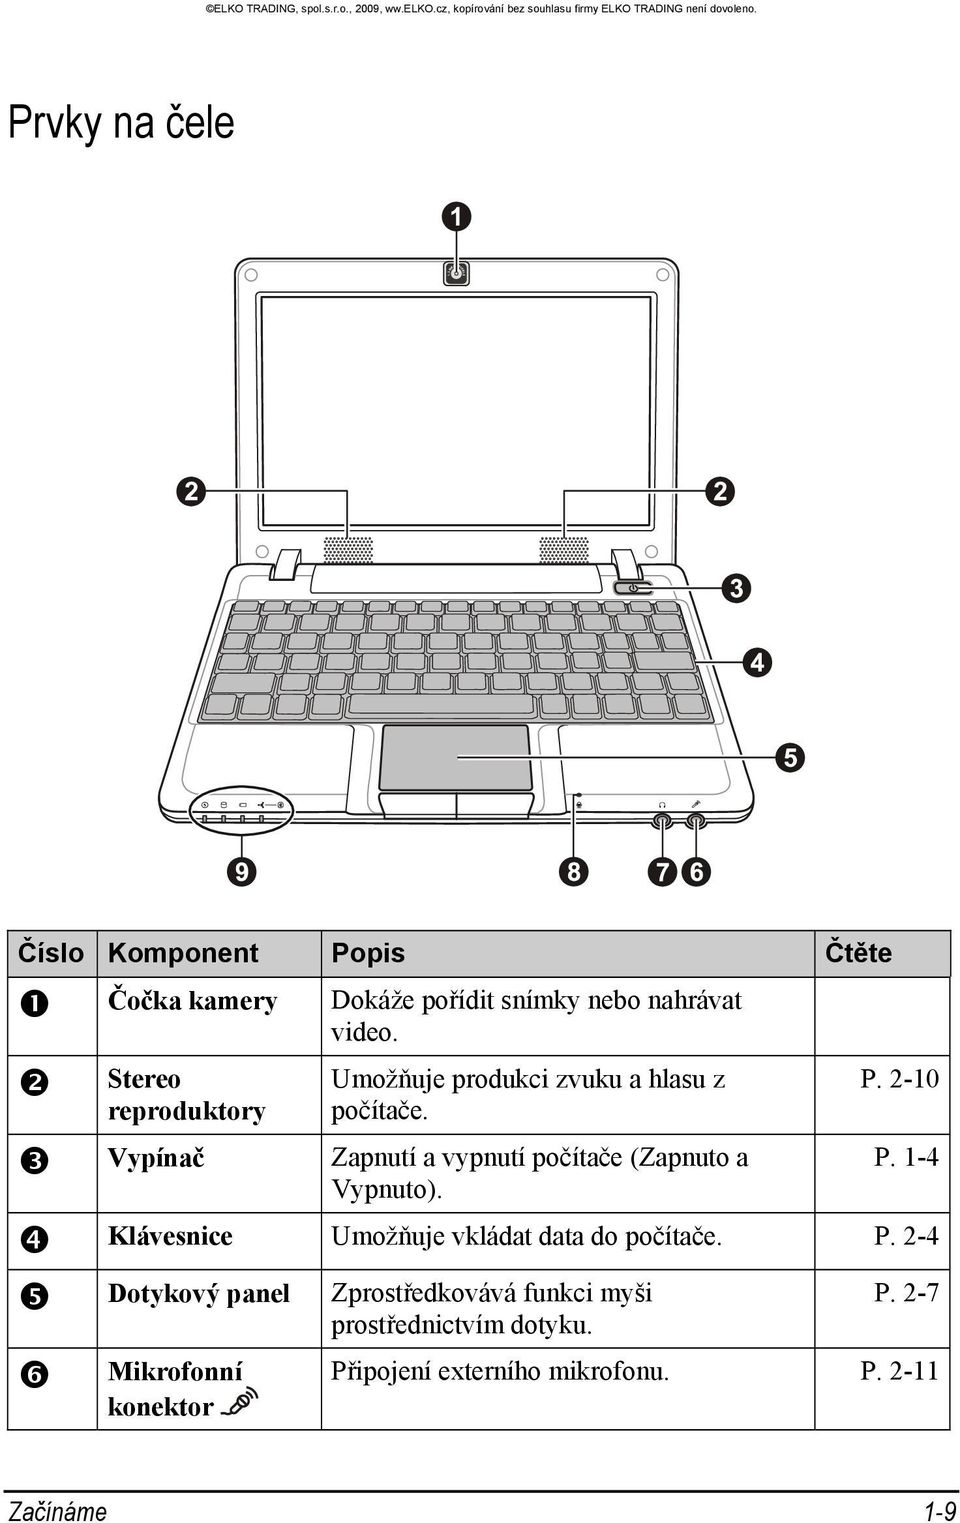 2-10 Vypínač Zapnutí a vypnutí počítače (Zapnuto a P. 1-4 Vypnuto).